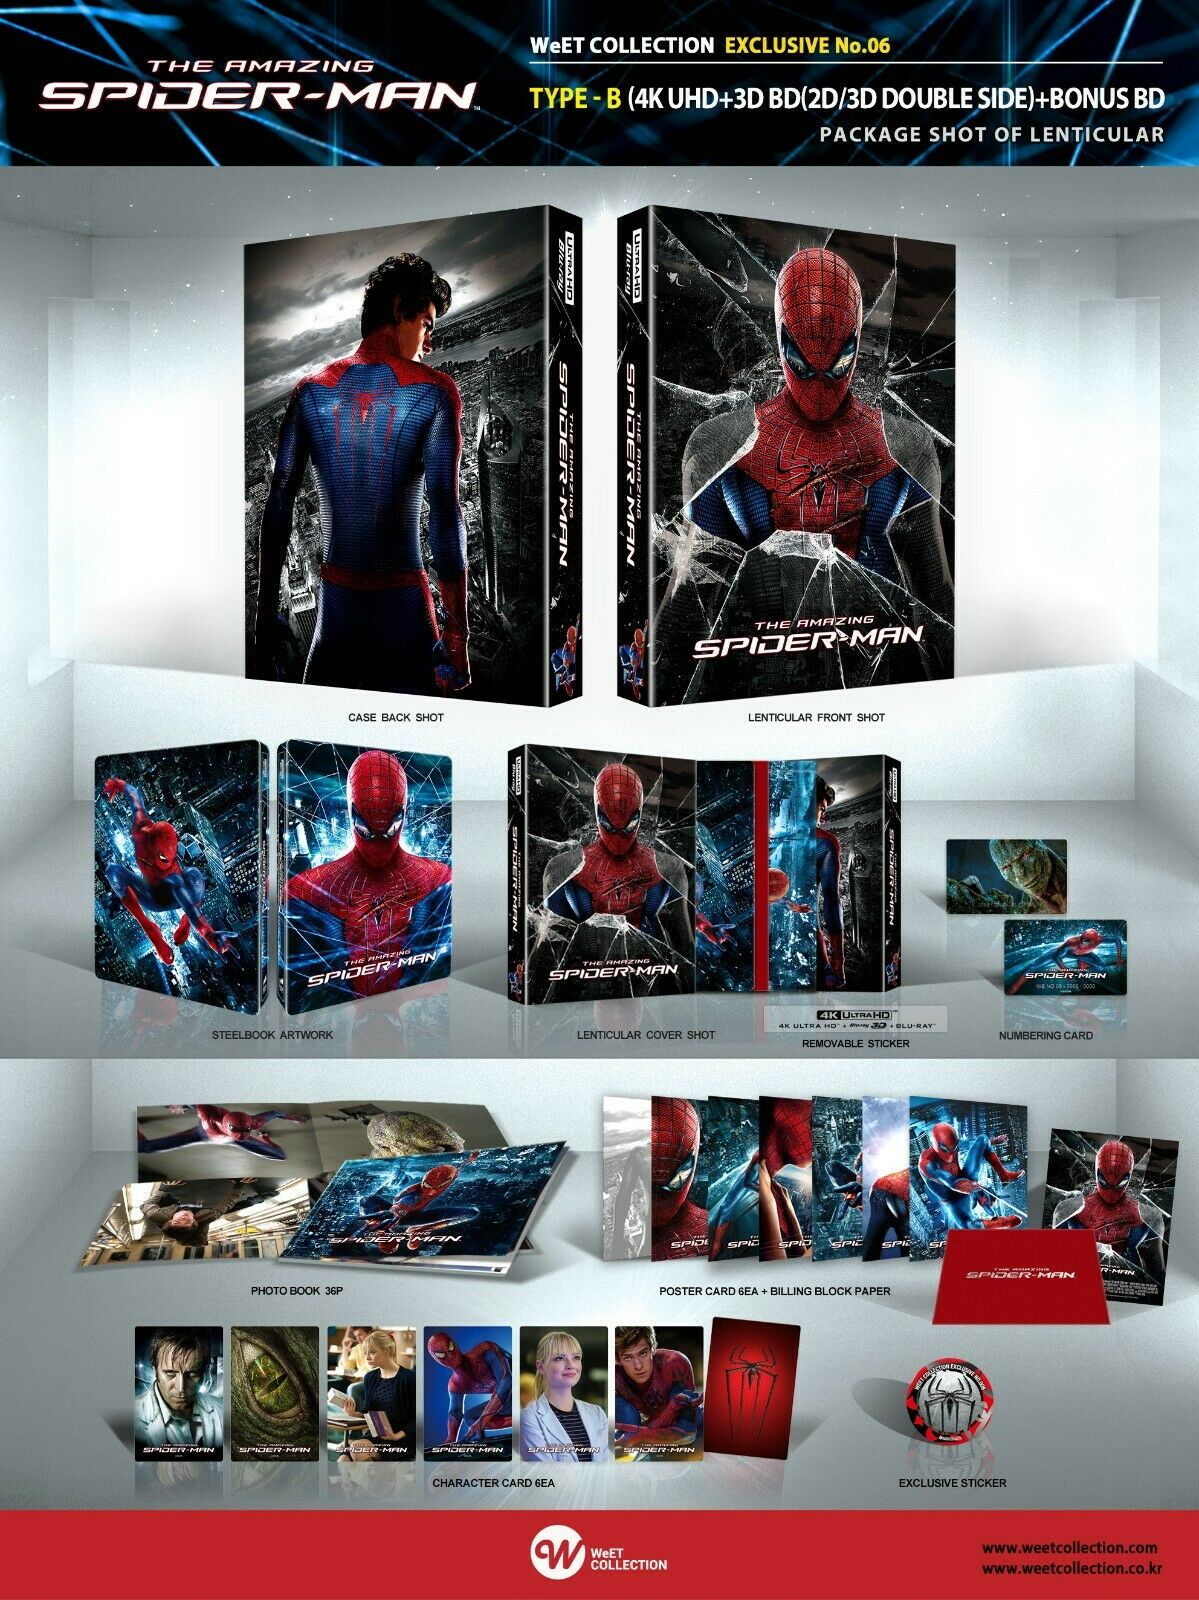 THE AMAZING SPIDER-MAN [4K UHD + 3D +2D] Blu-ray 